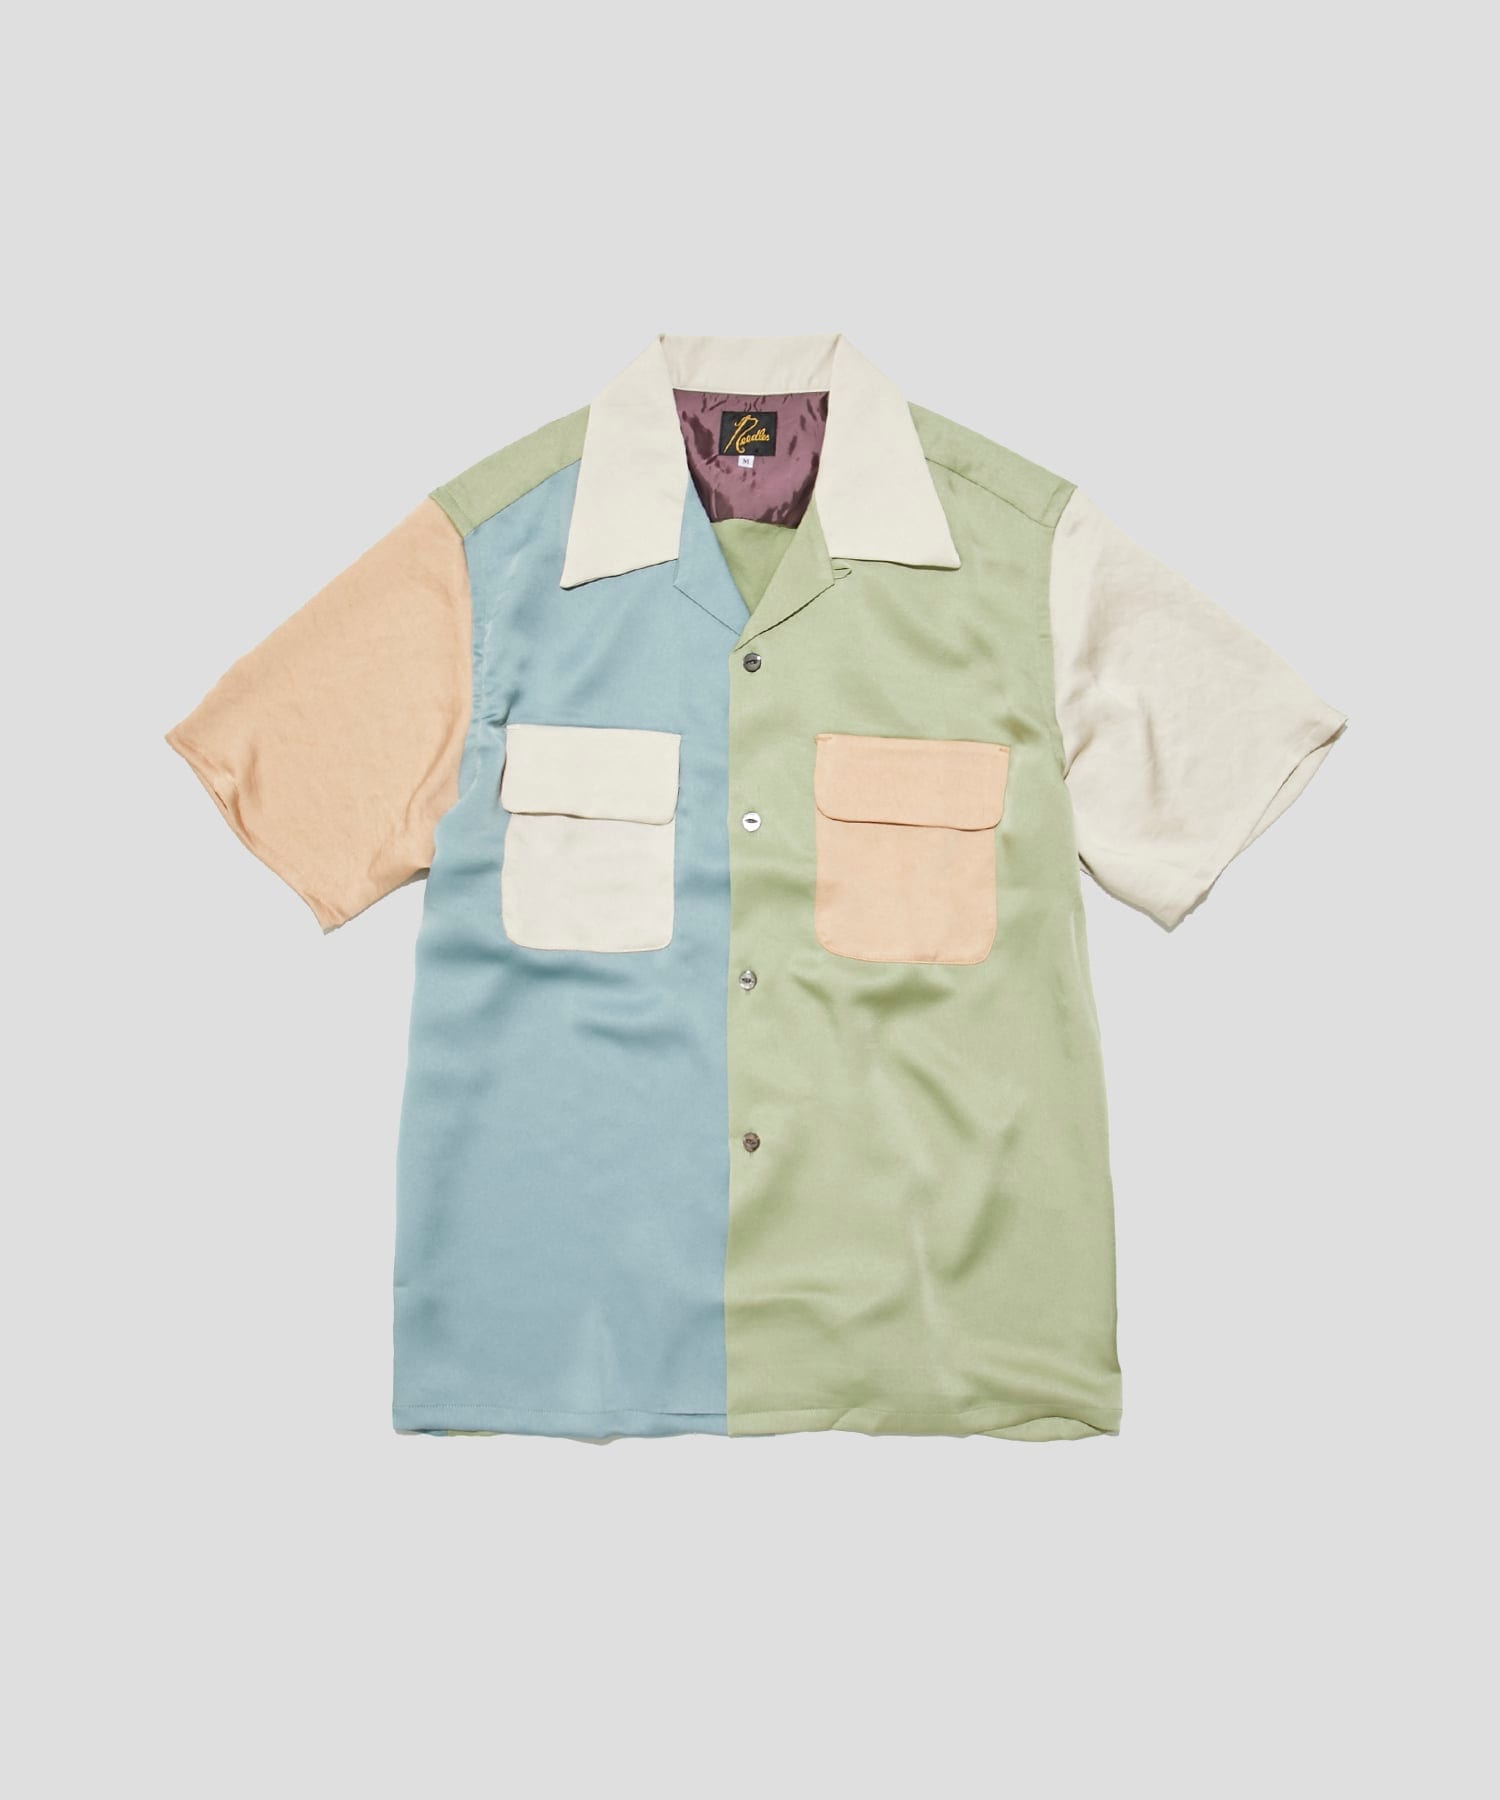 S/S Classic Shirt - Poly Sateen / Light Tone